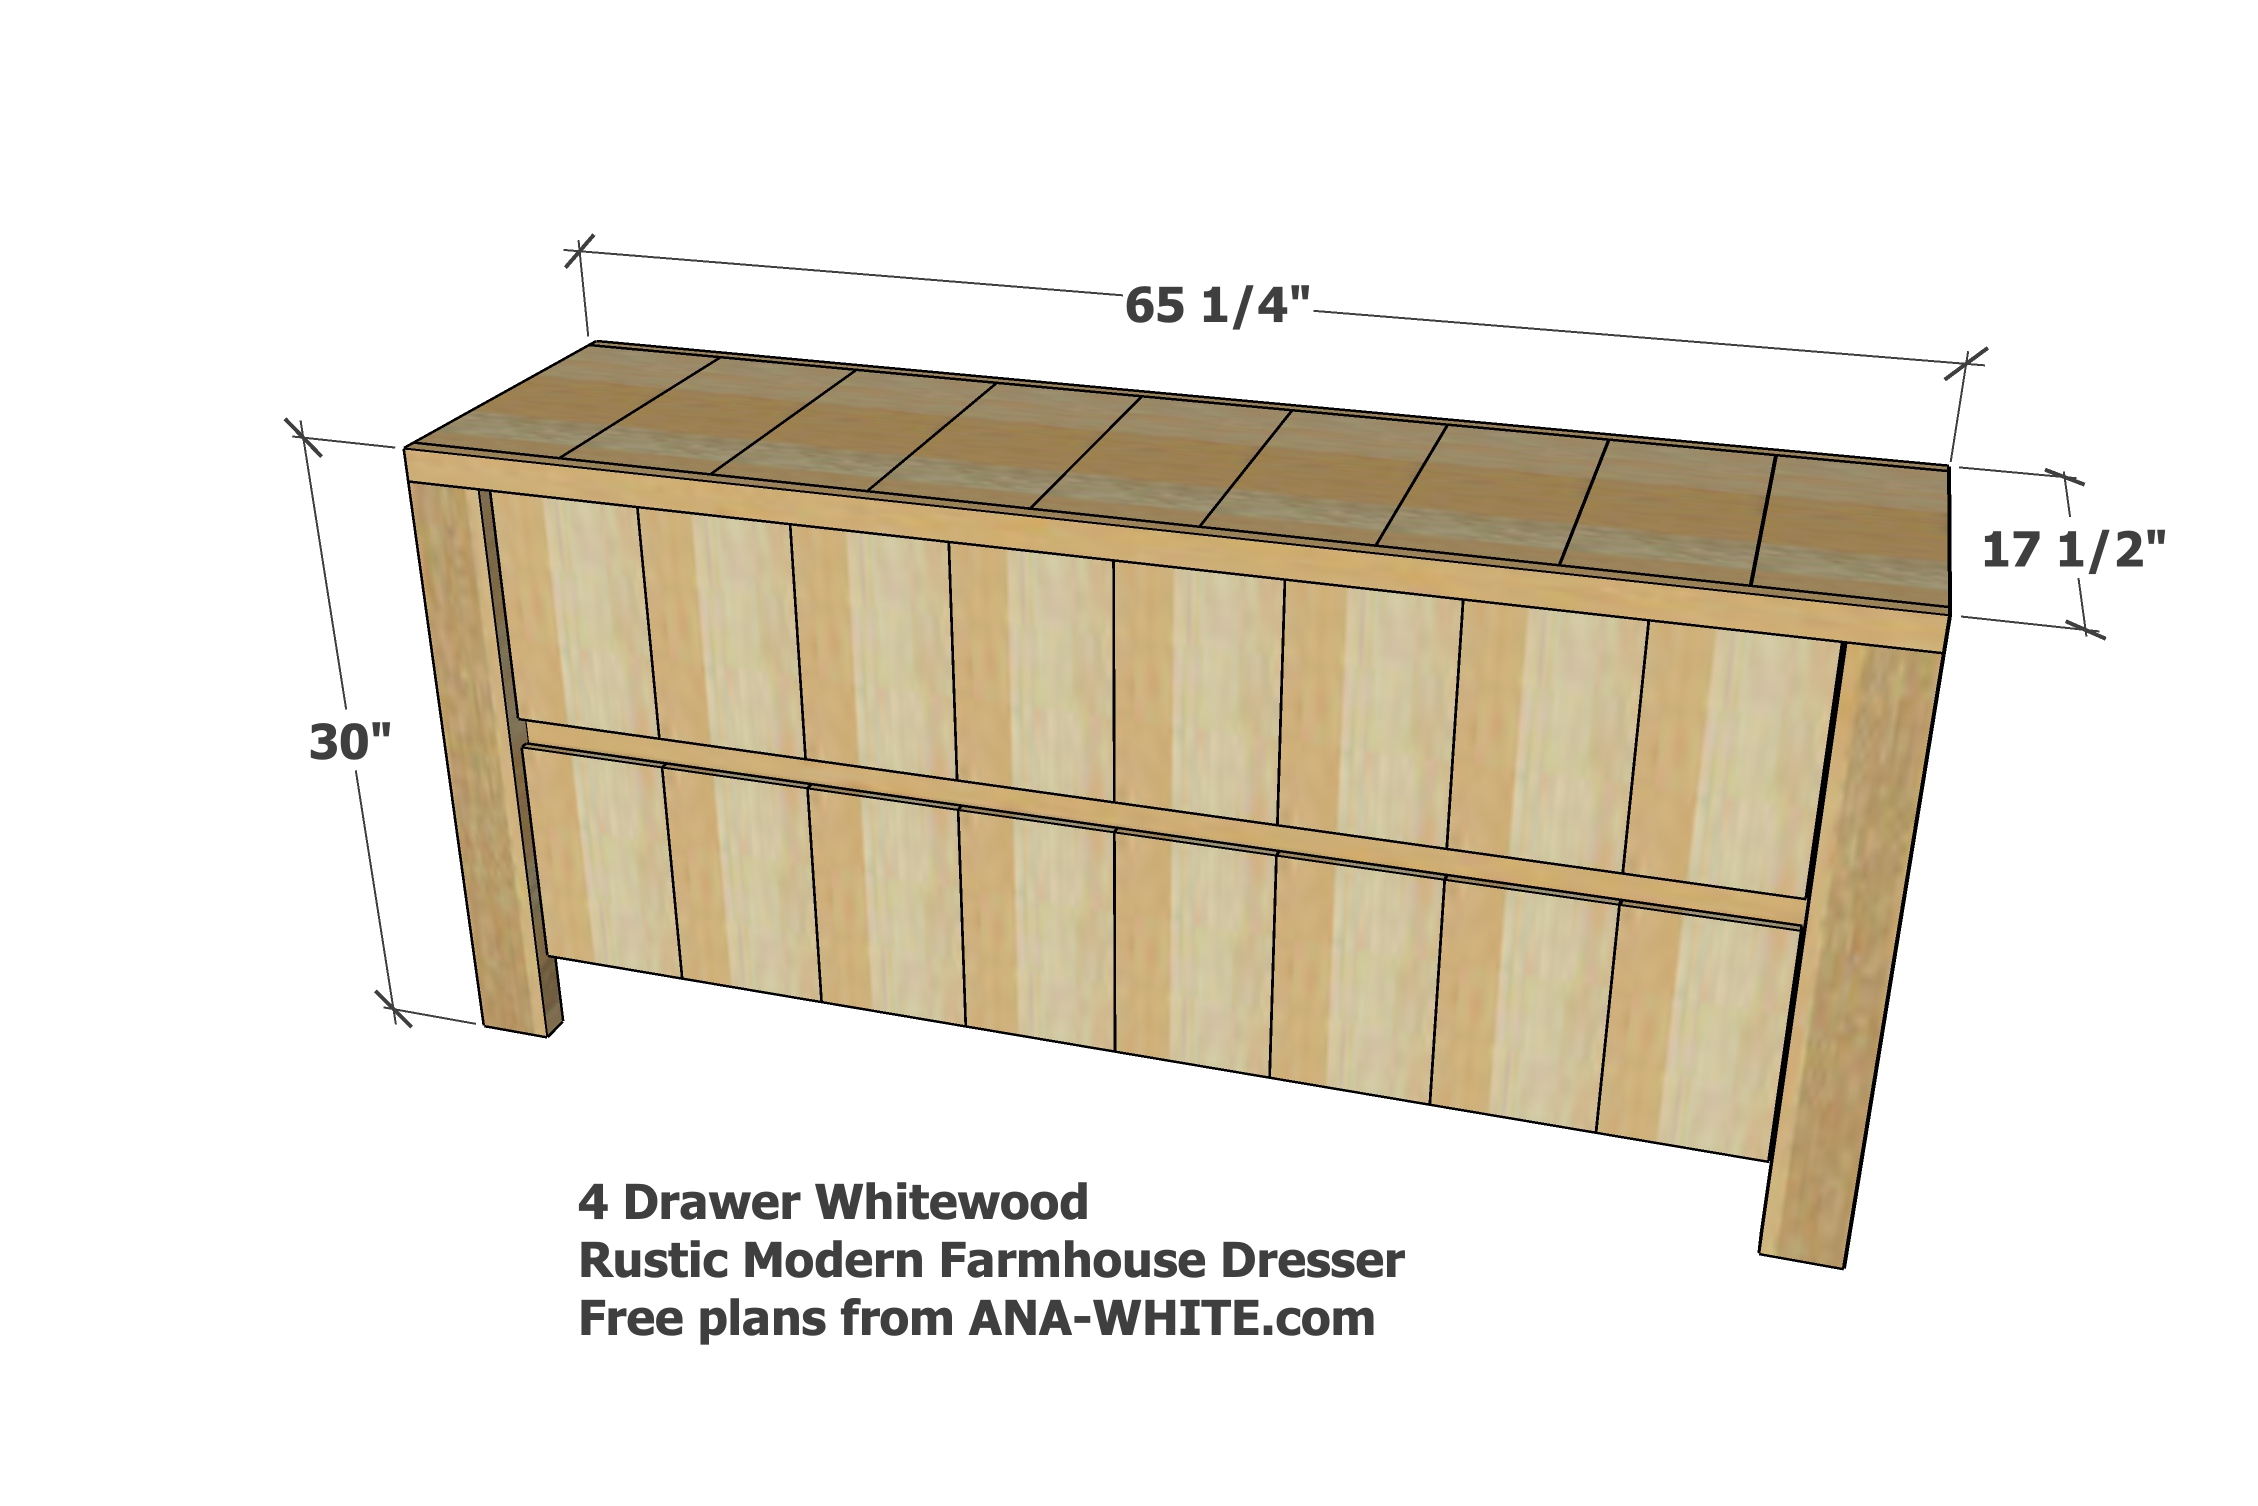 dimensions for rustic modern farmhouse dresser